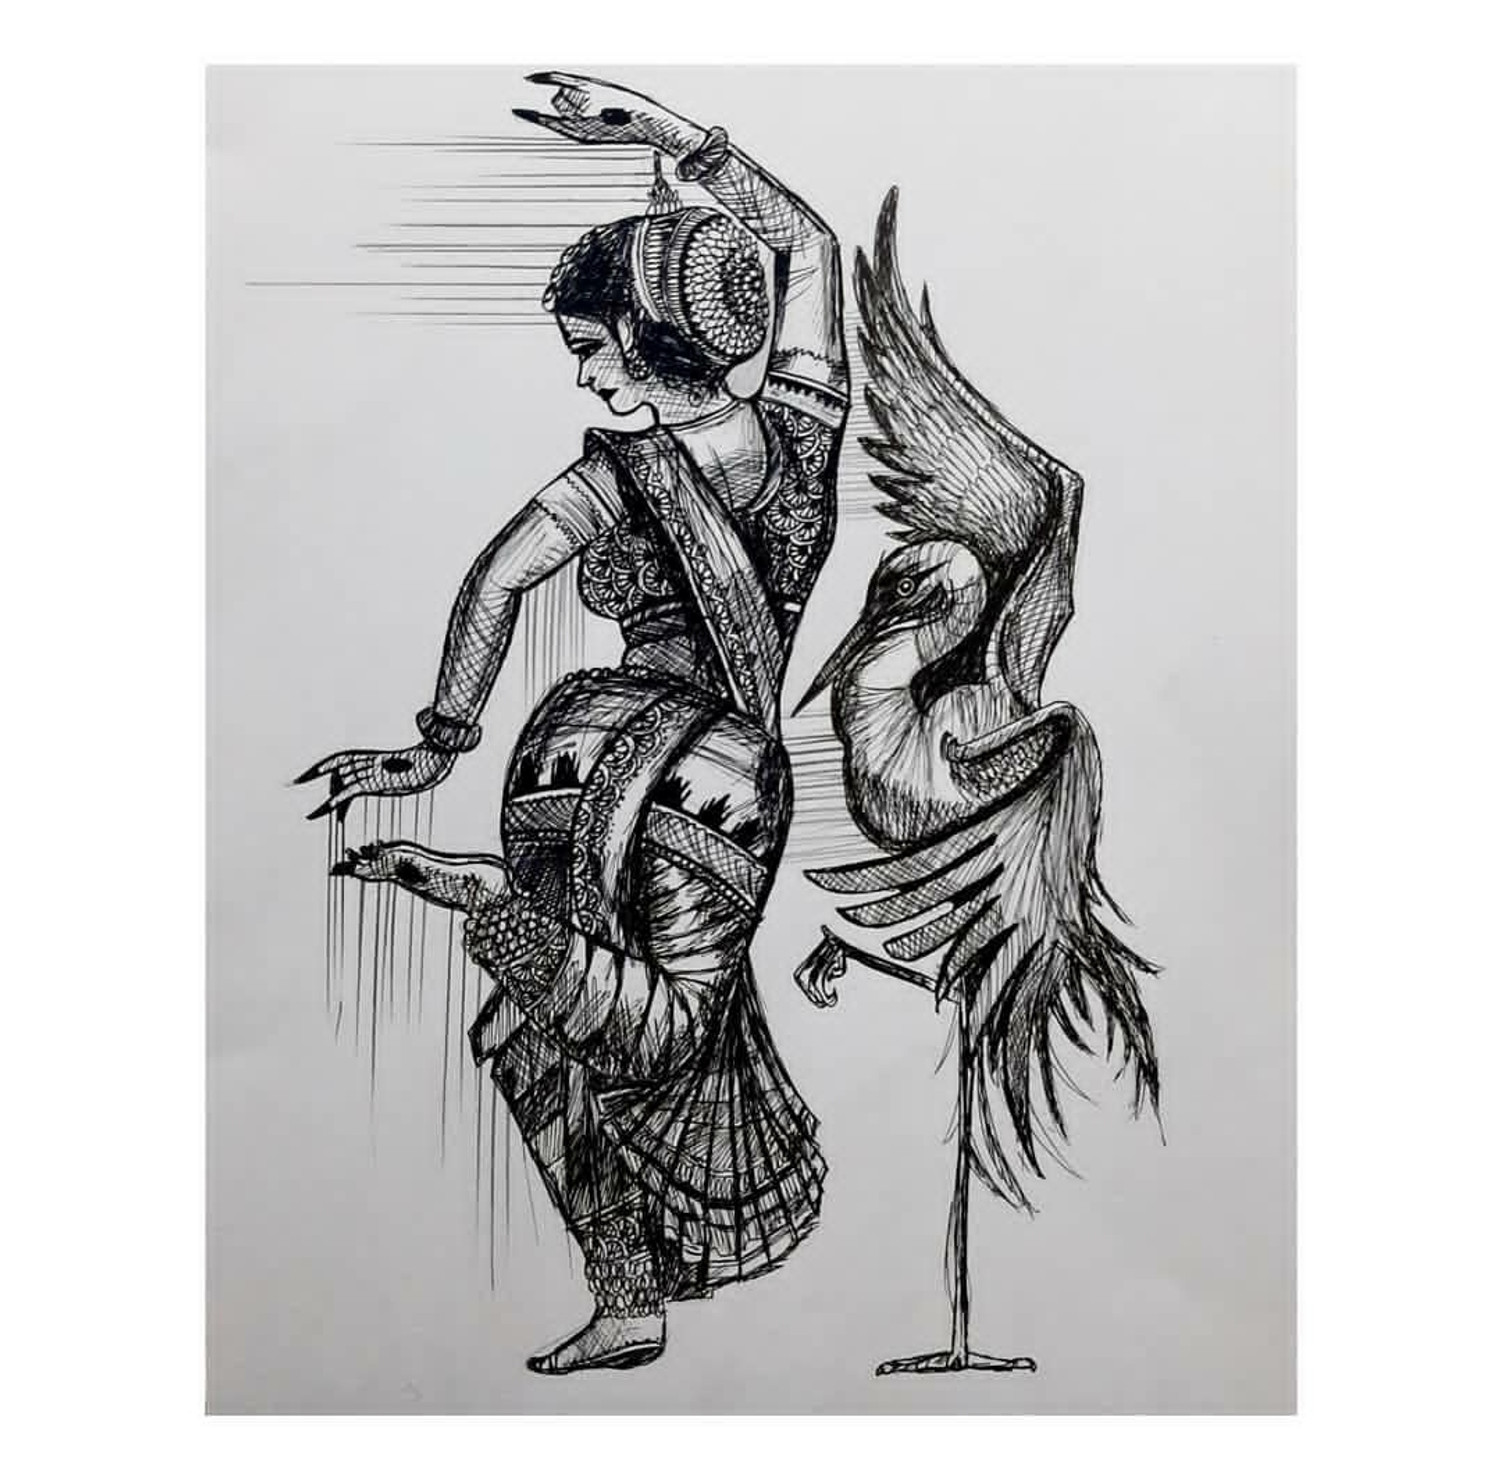 Ali Jafars Drawings  Kathak Dancer Pen on Paper Please share if you like  it  Facebook